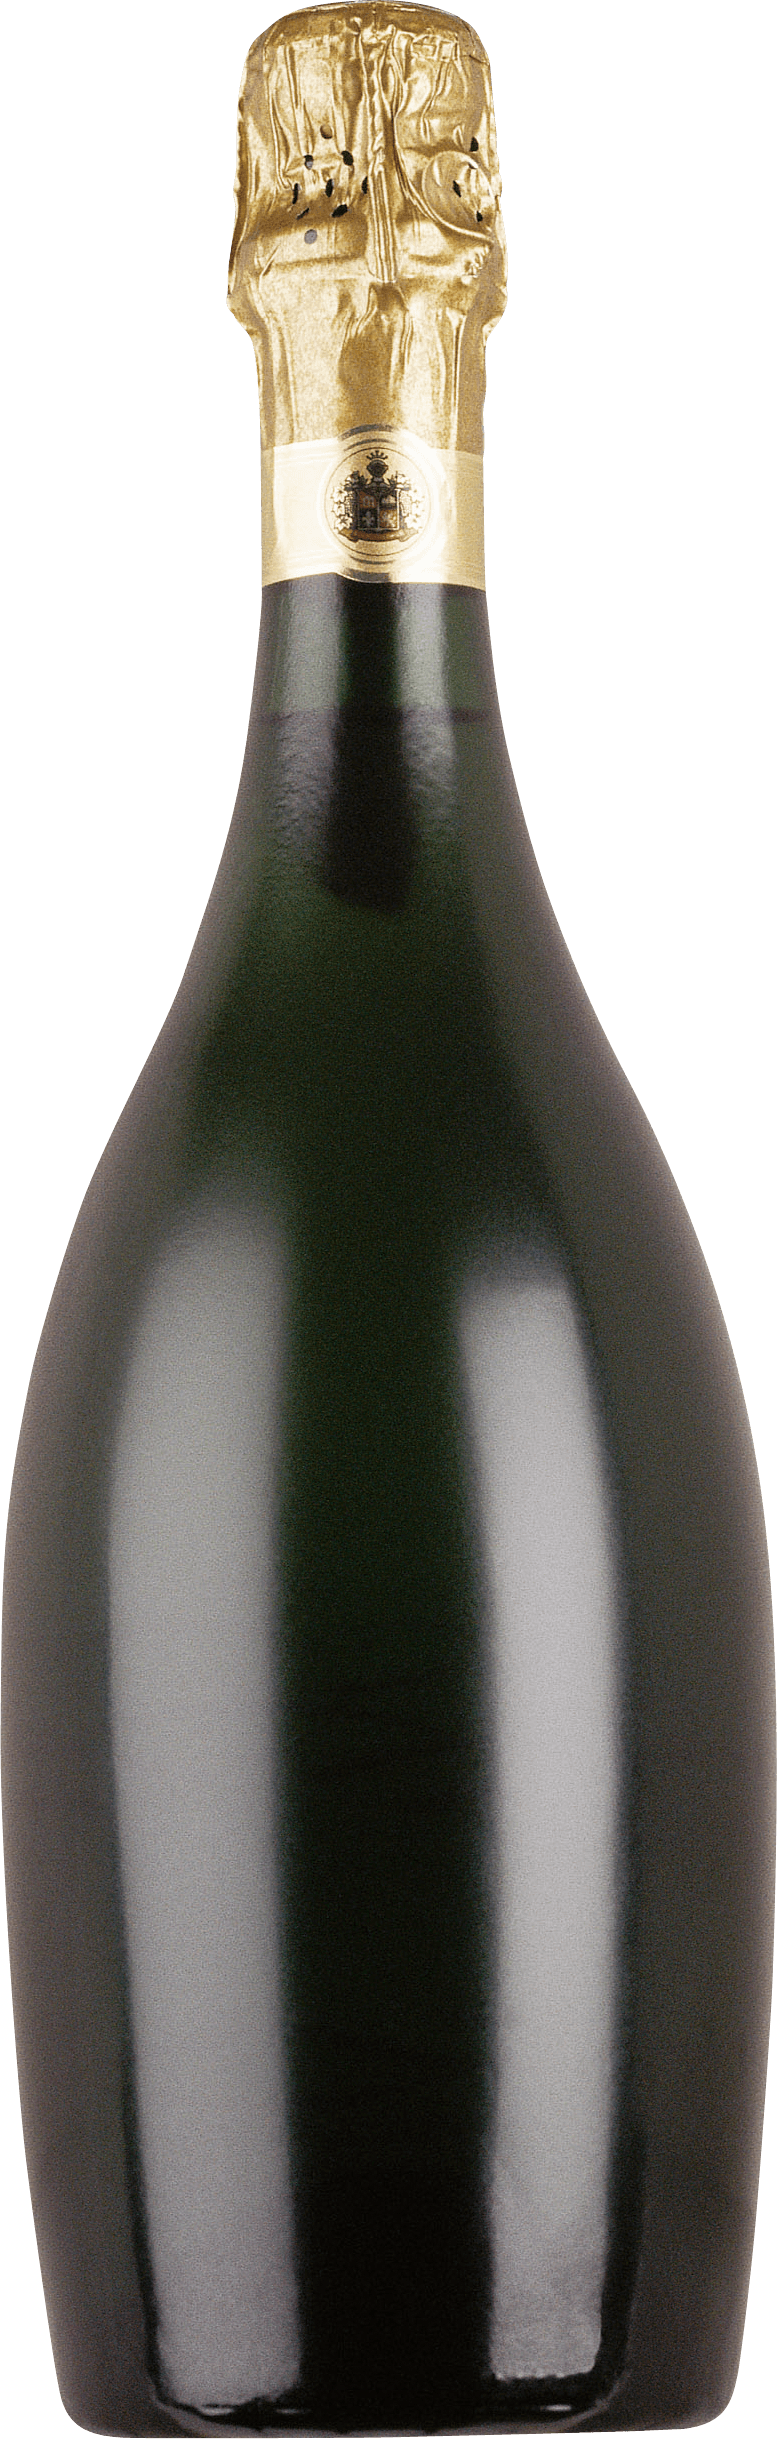 Large Champagne Bottle PNG images